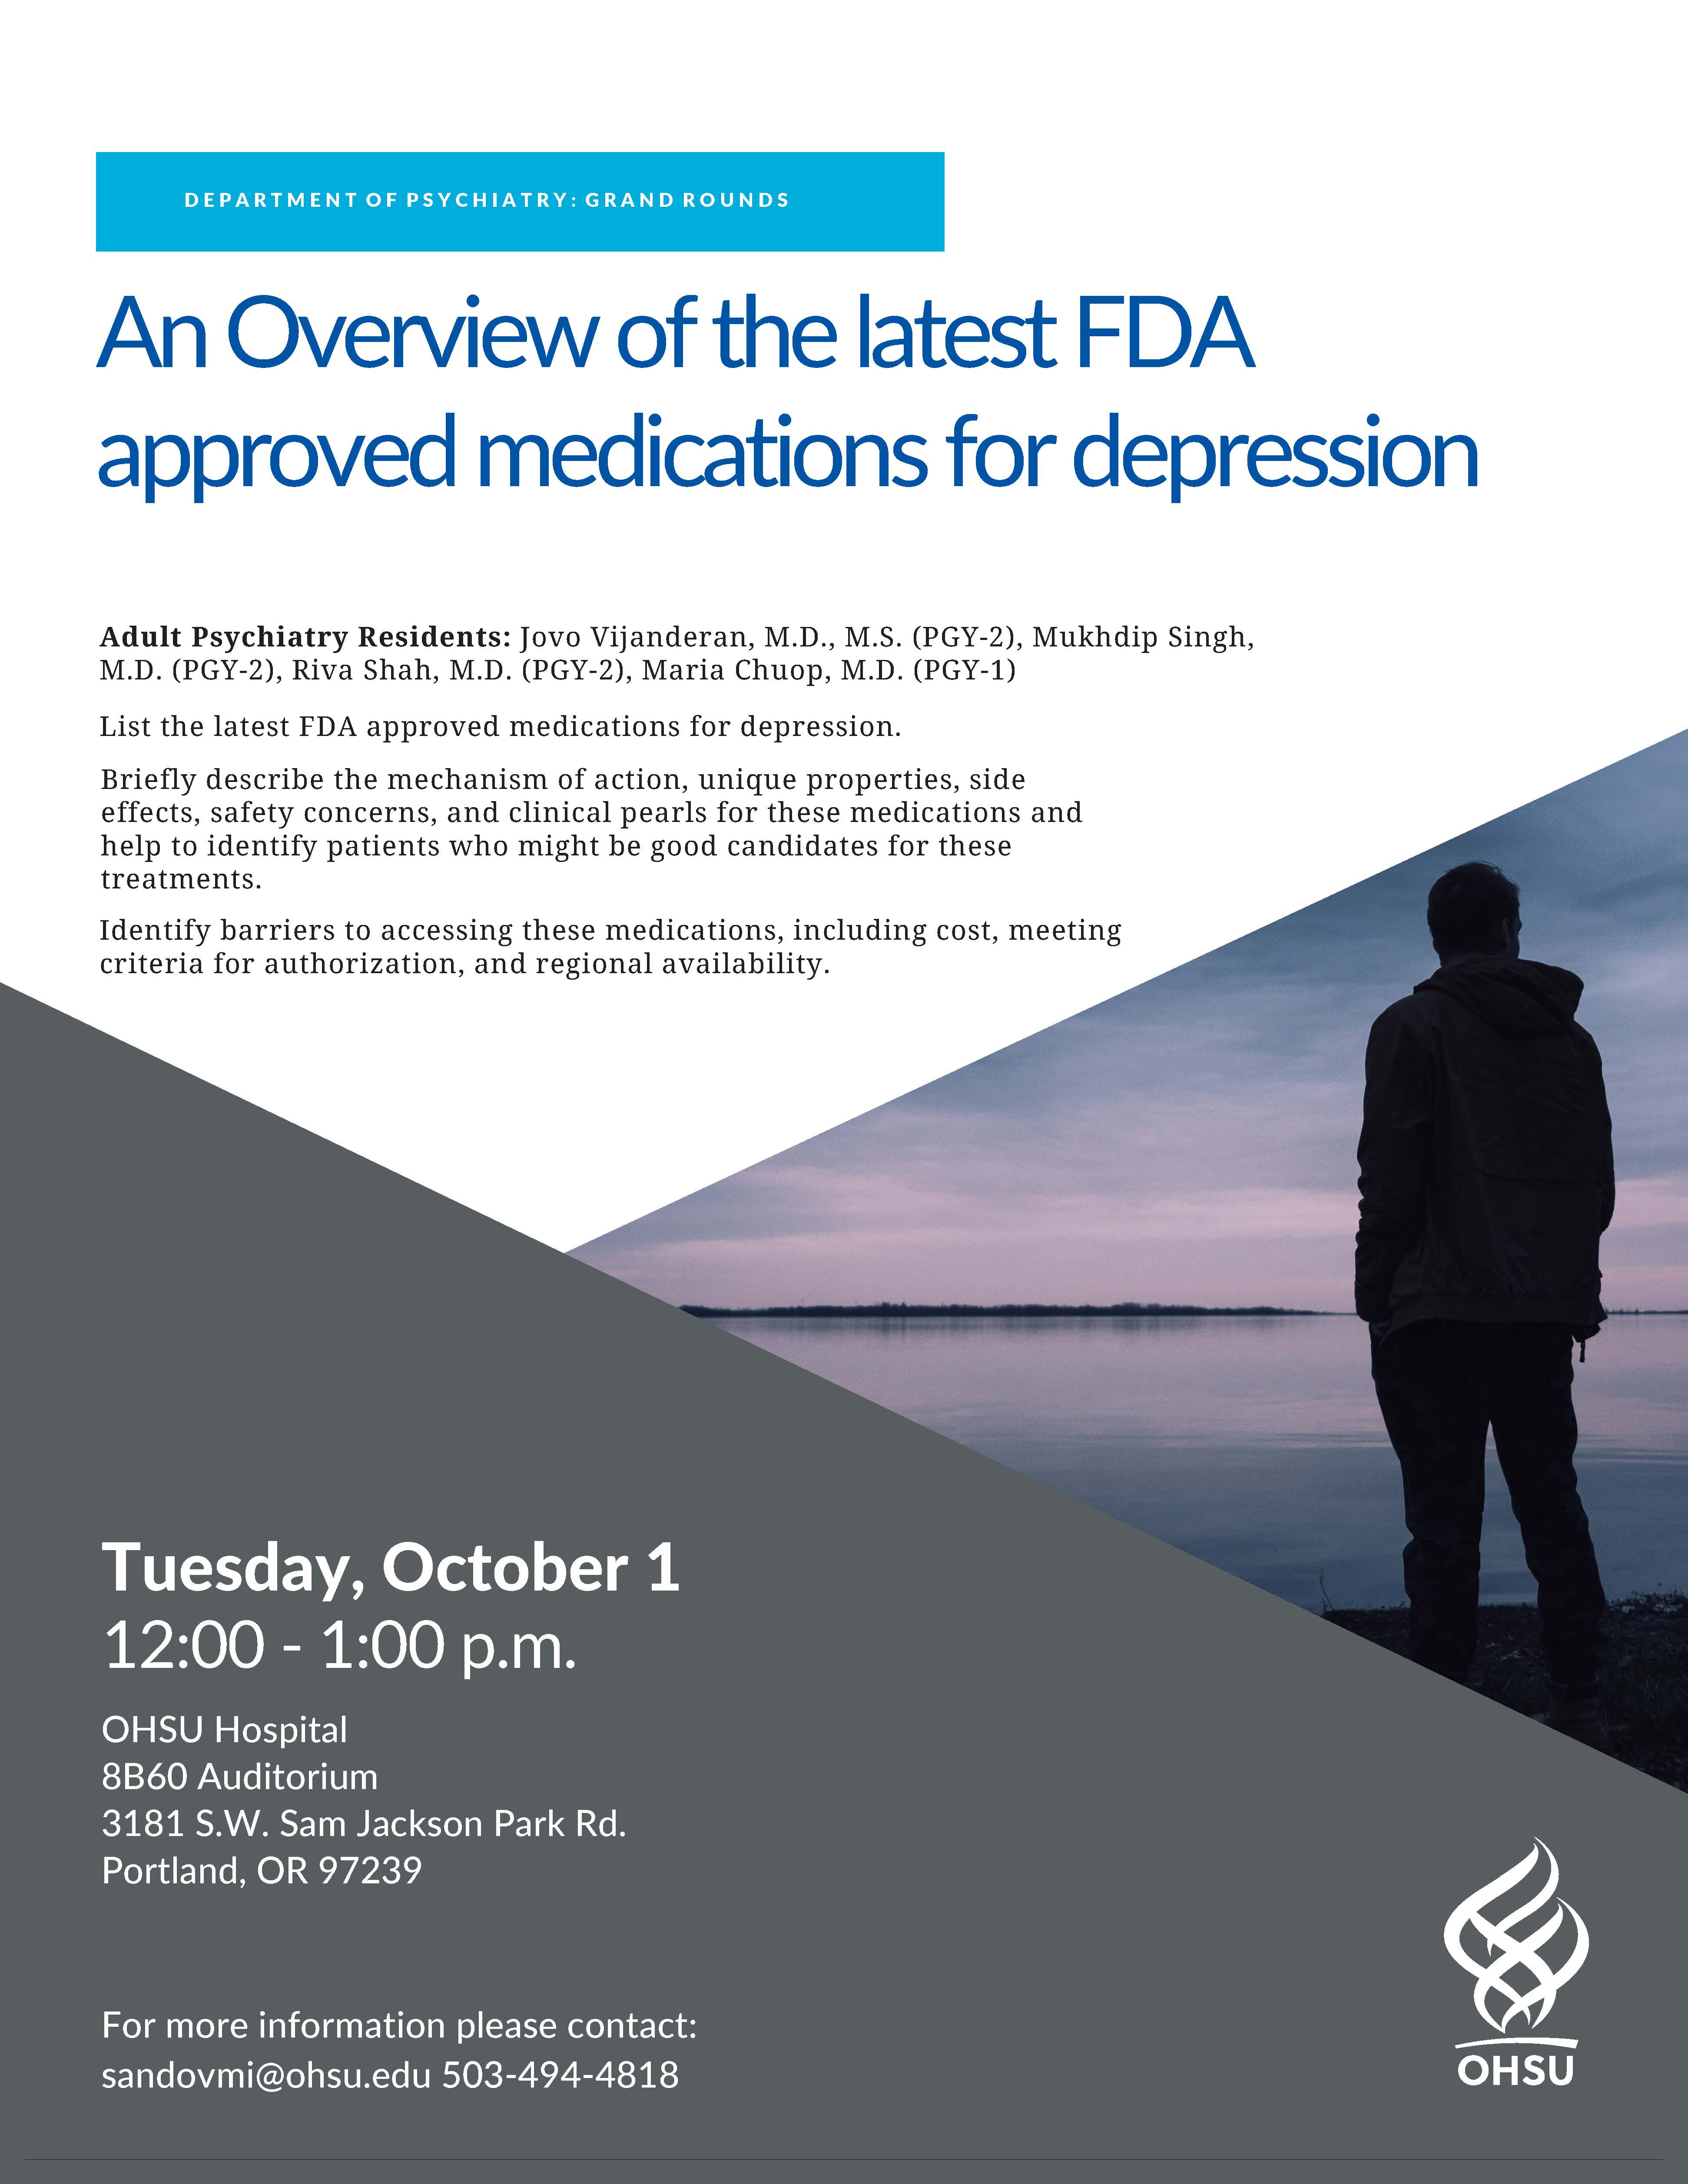 FDA approval of depression medications